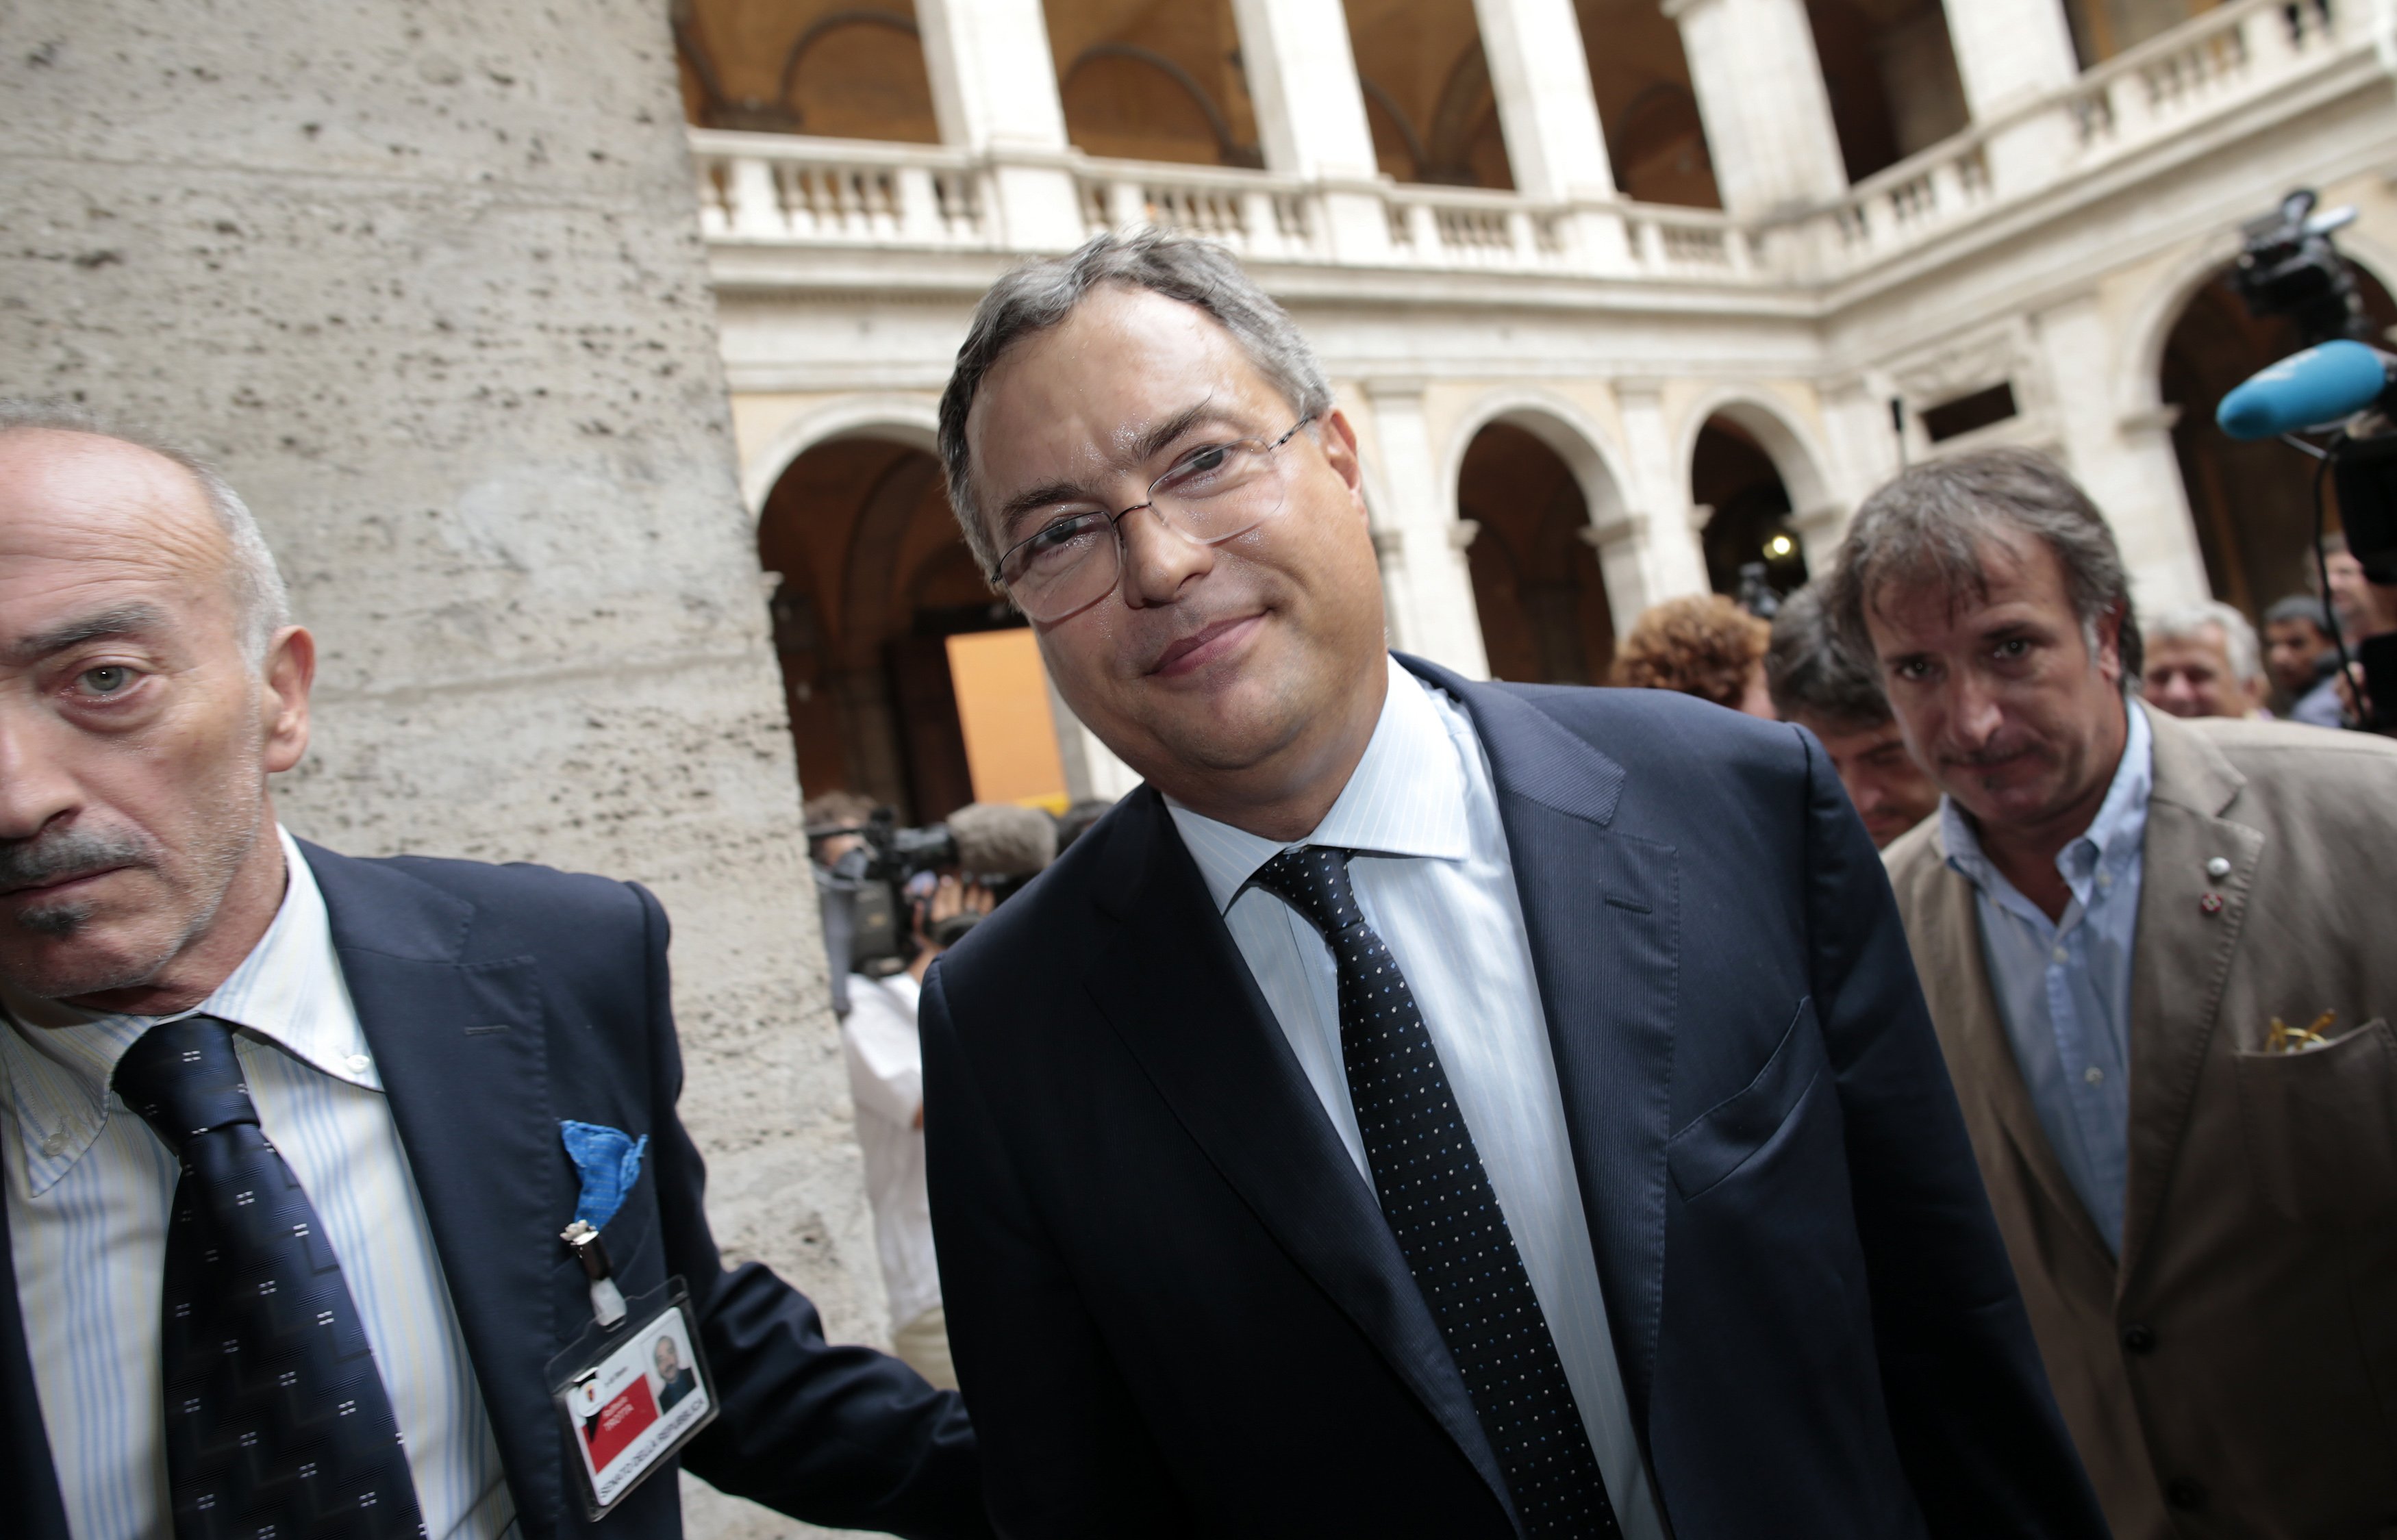 Berlusconi allies step up threats over Italian Senate ruling